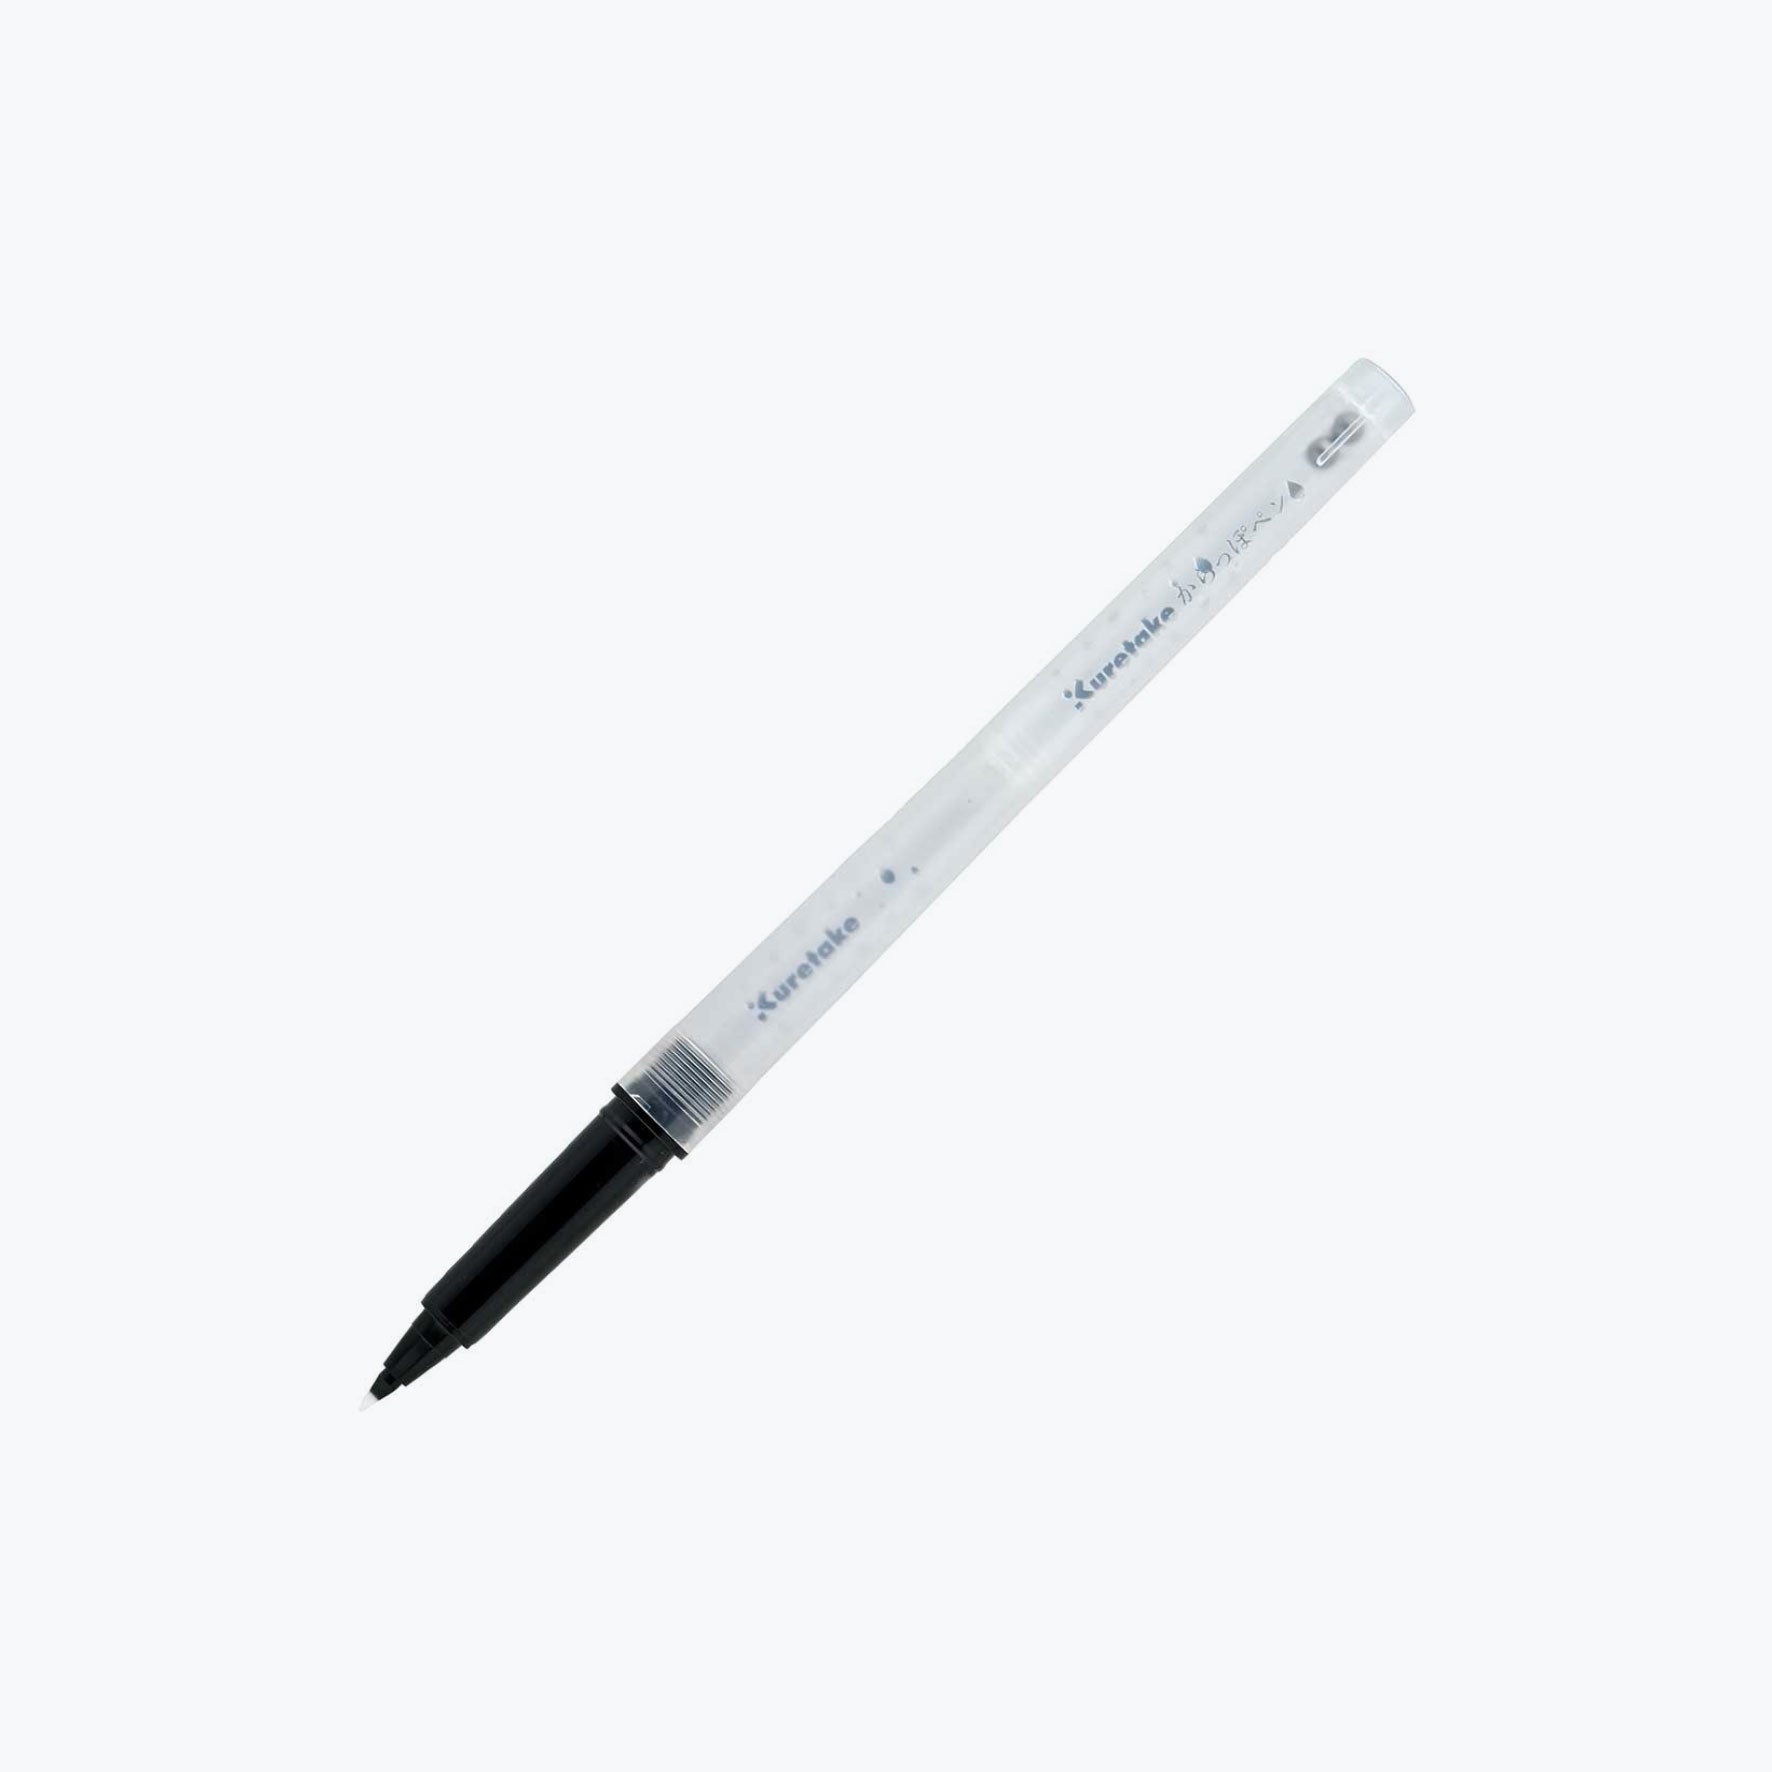 Kuretake - Karappo-Pen (Cartridge) - Fine <Outgoing>